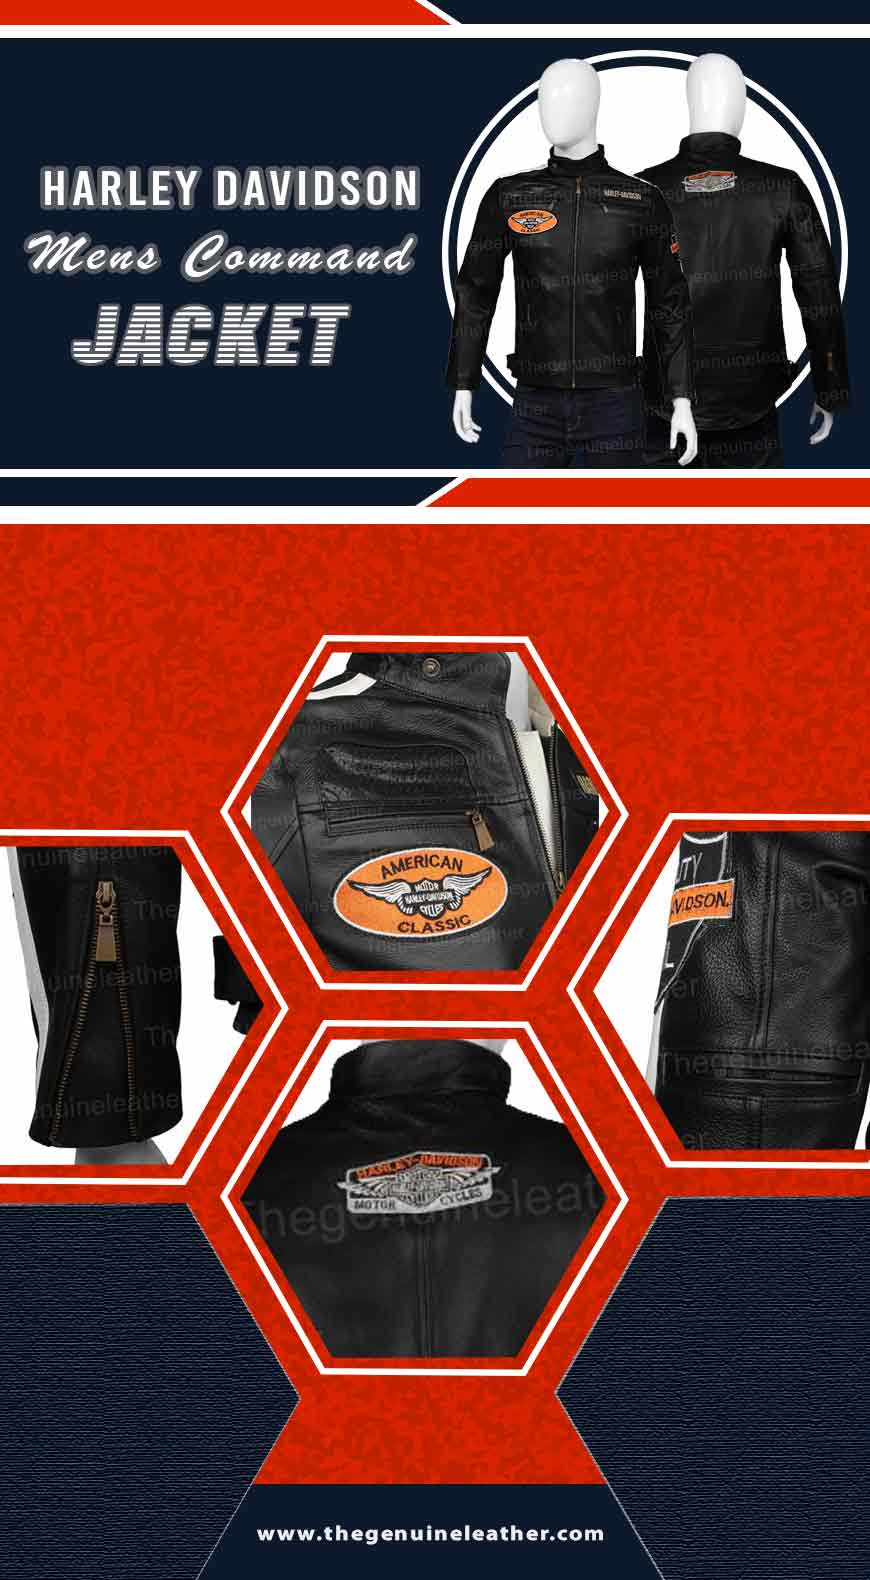 The Jacket Makers Brown Harley Motorcycle Leather Biker Jacket for Mens.